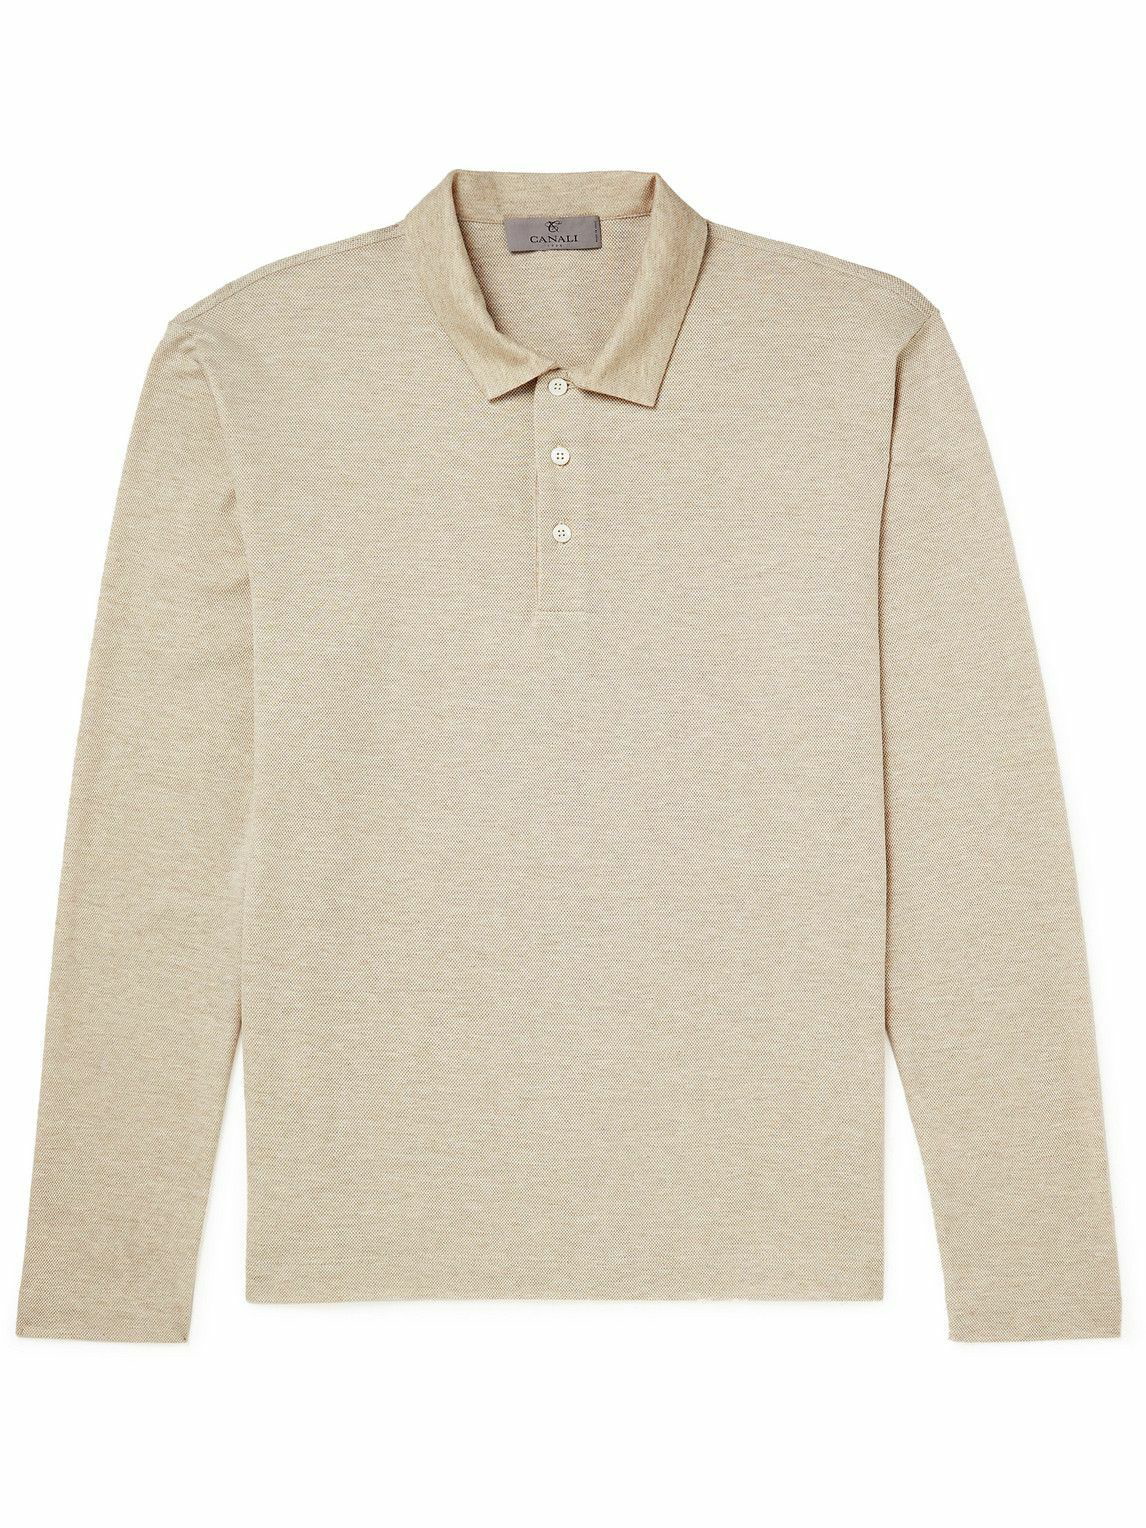 Canali - Cotton-Piqué Polo Shirt - Neutrals Canali